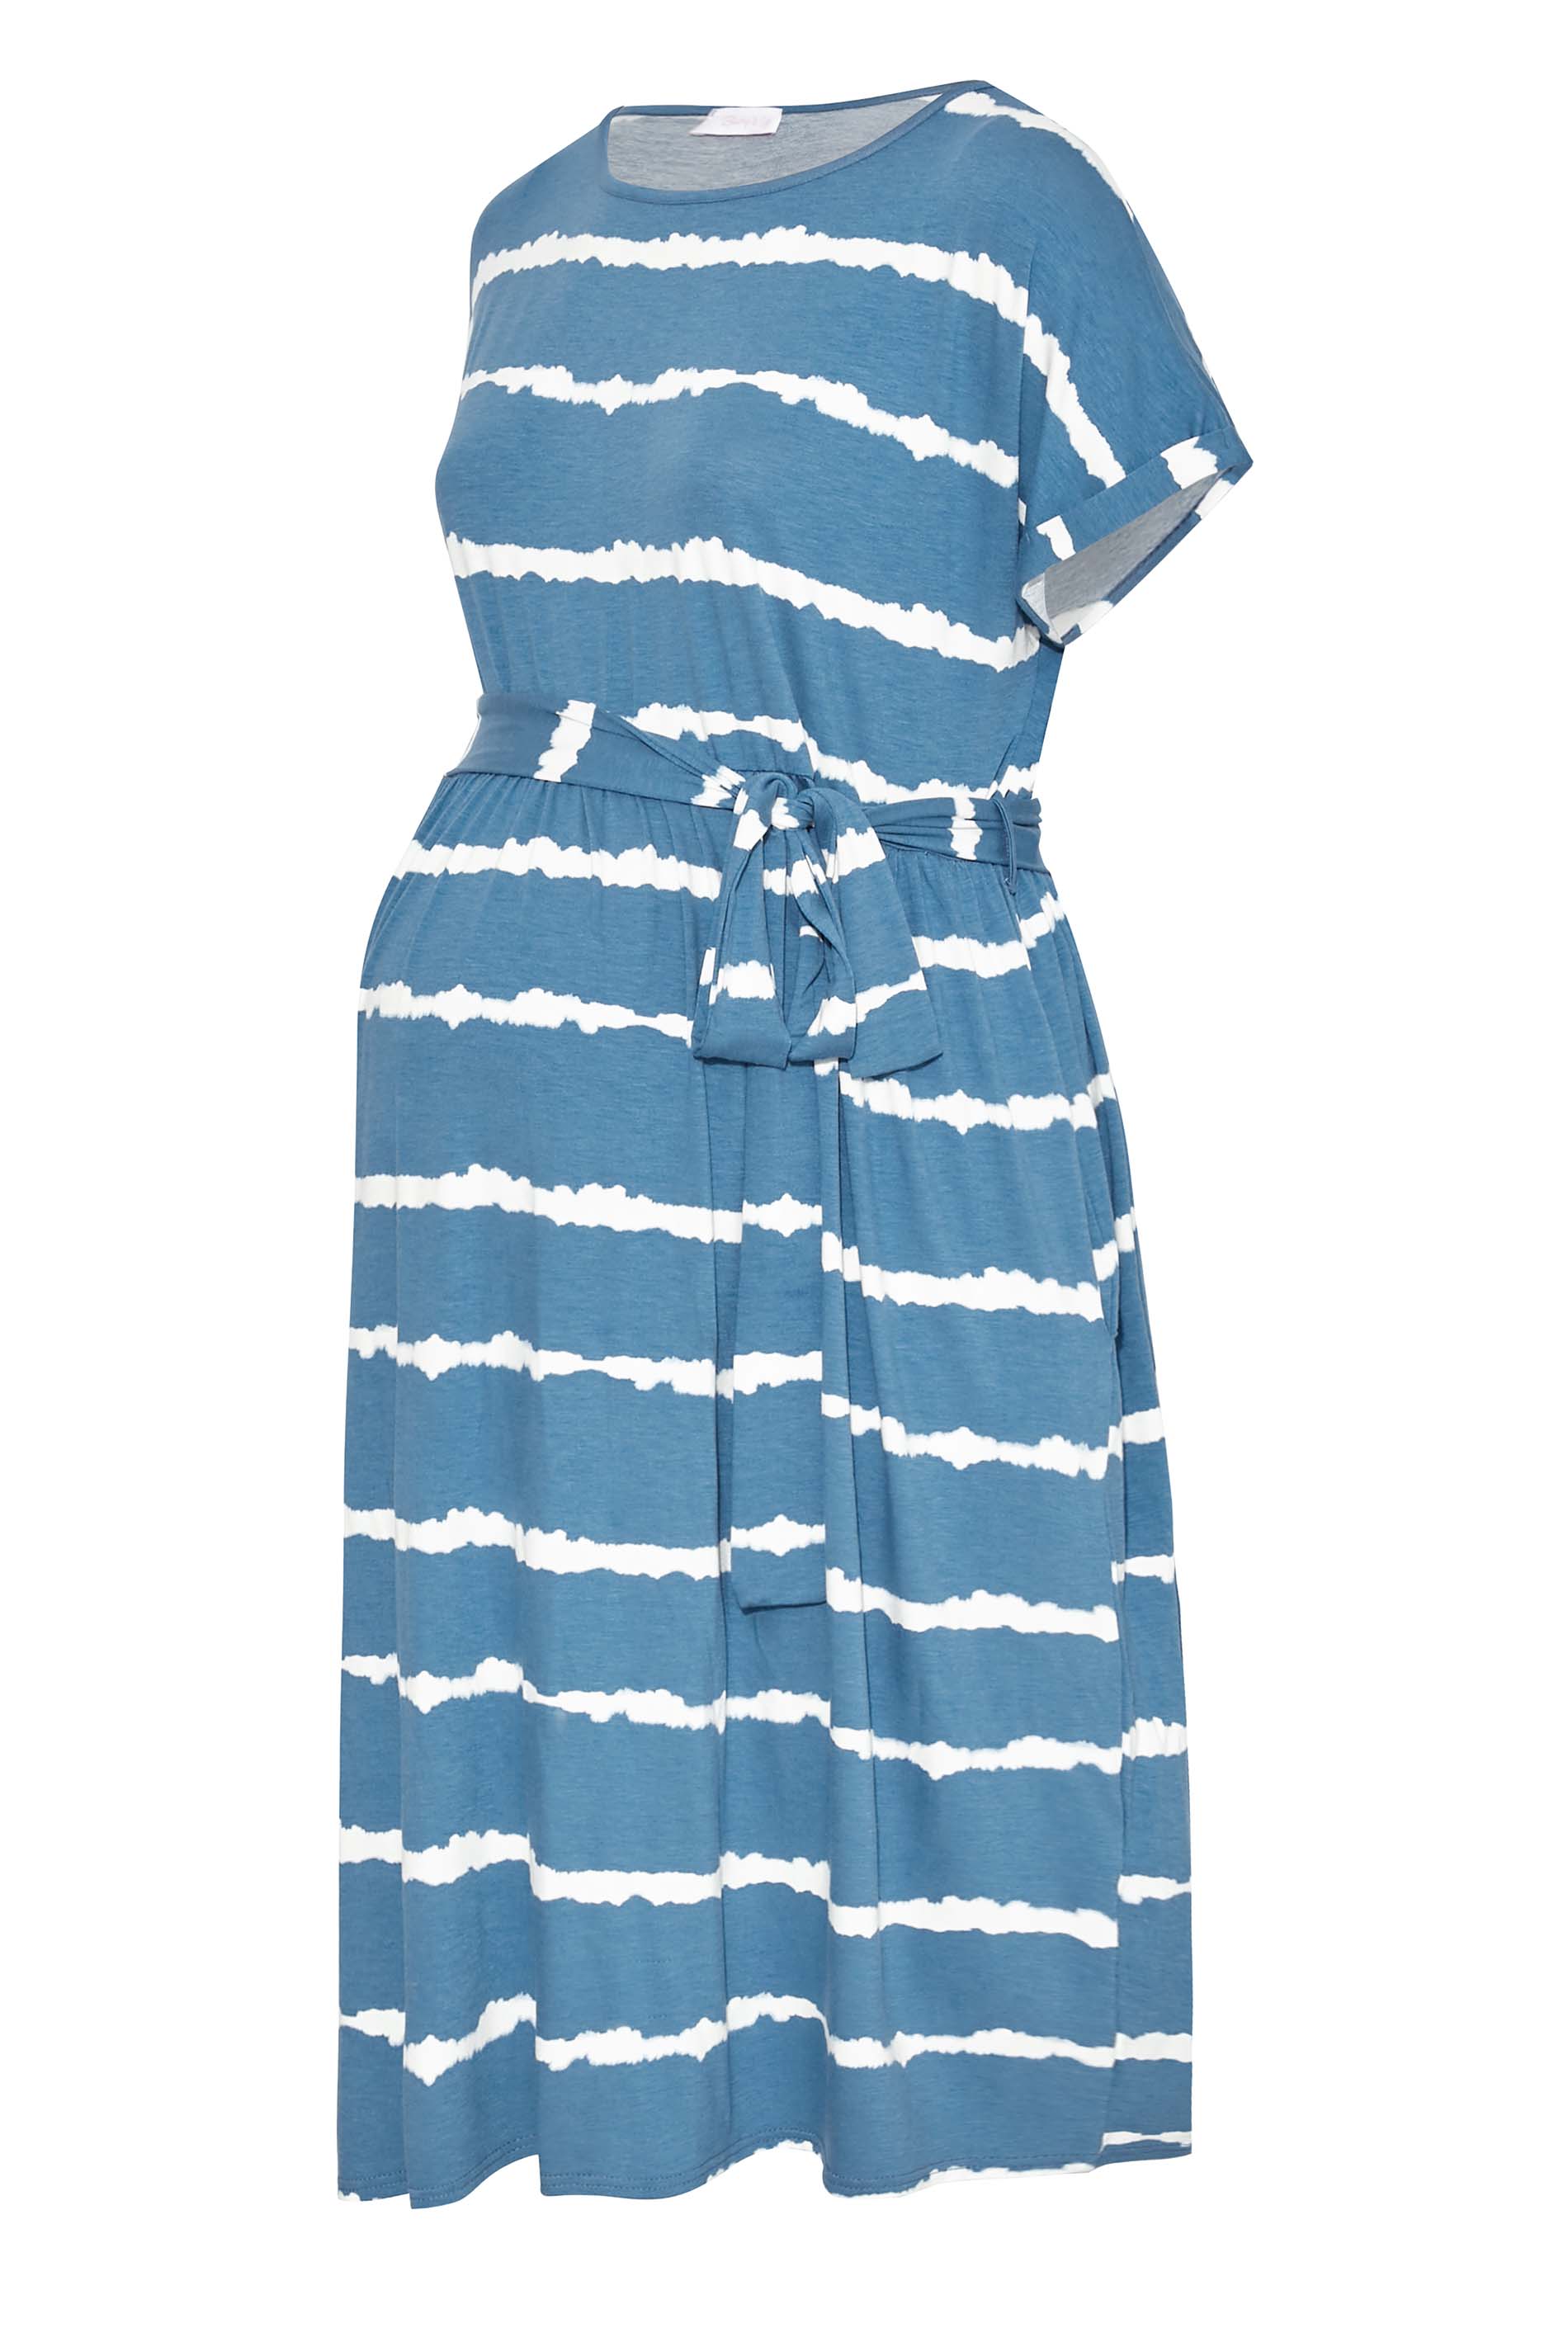 Grande taille  Vêtements de Grossesse Grande taille  Robe de grossesse | BUMP IT UP MATERNITY Curve Blue Tie Dye Belted Dress - ZM34681